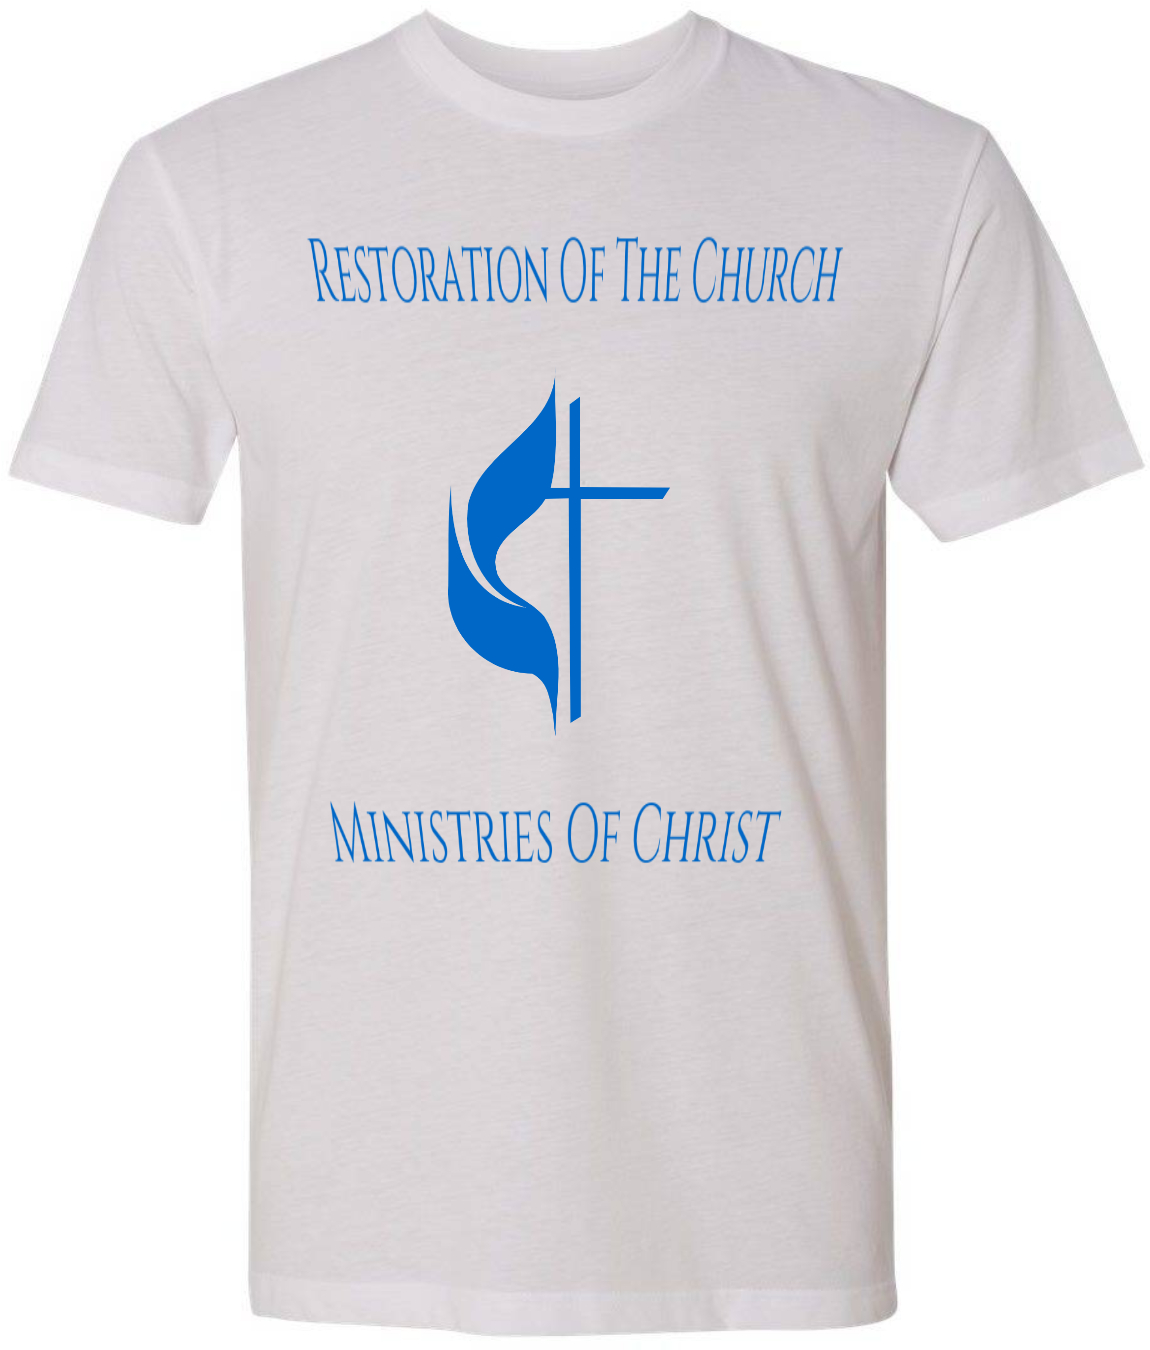 Church shirts 2